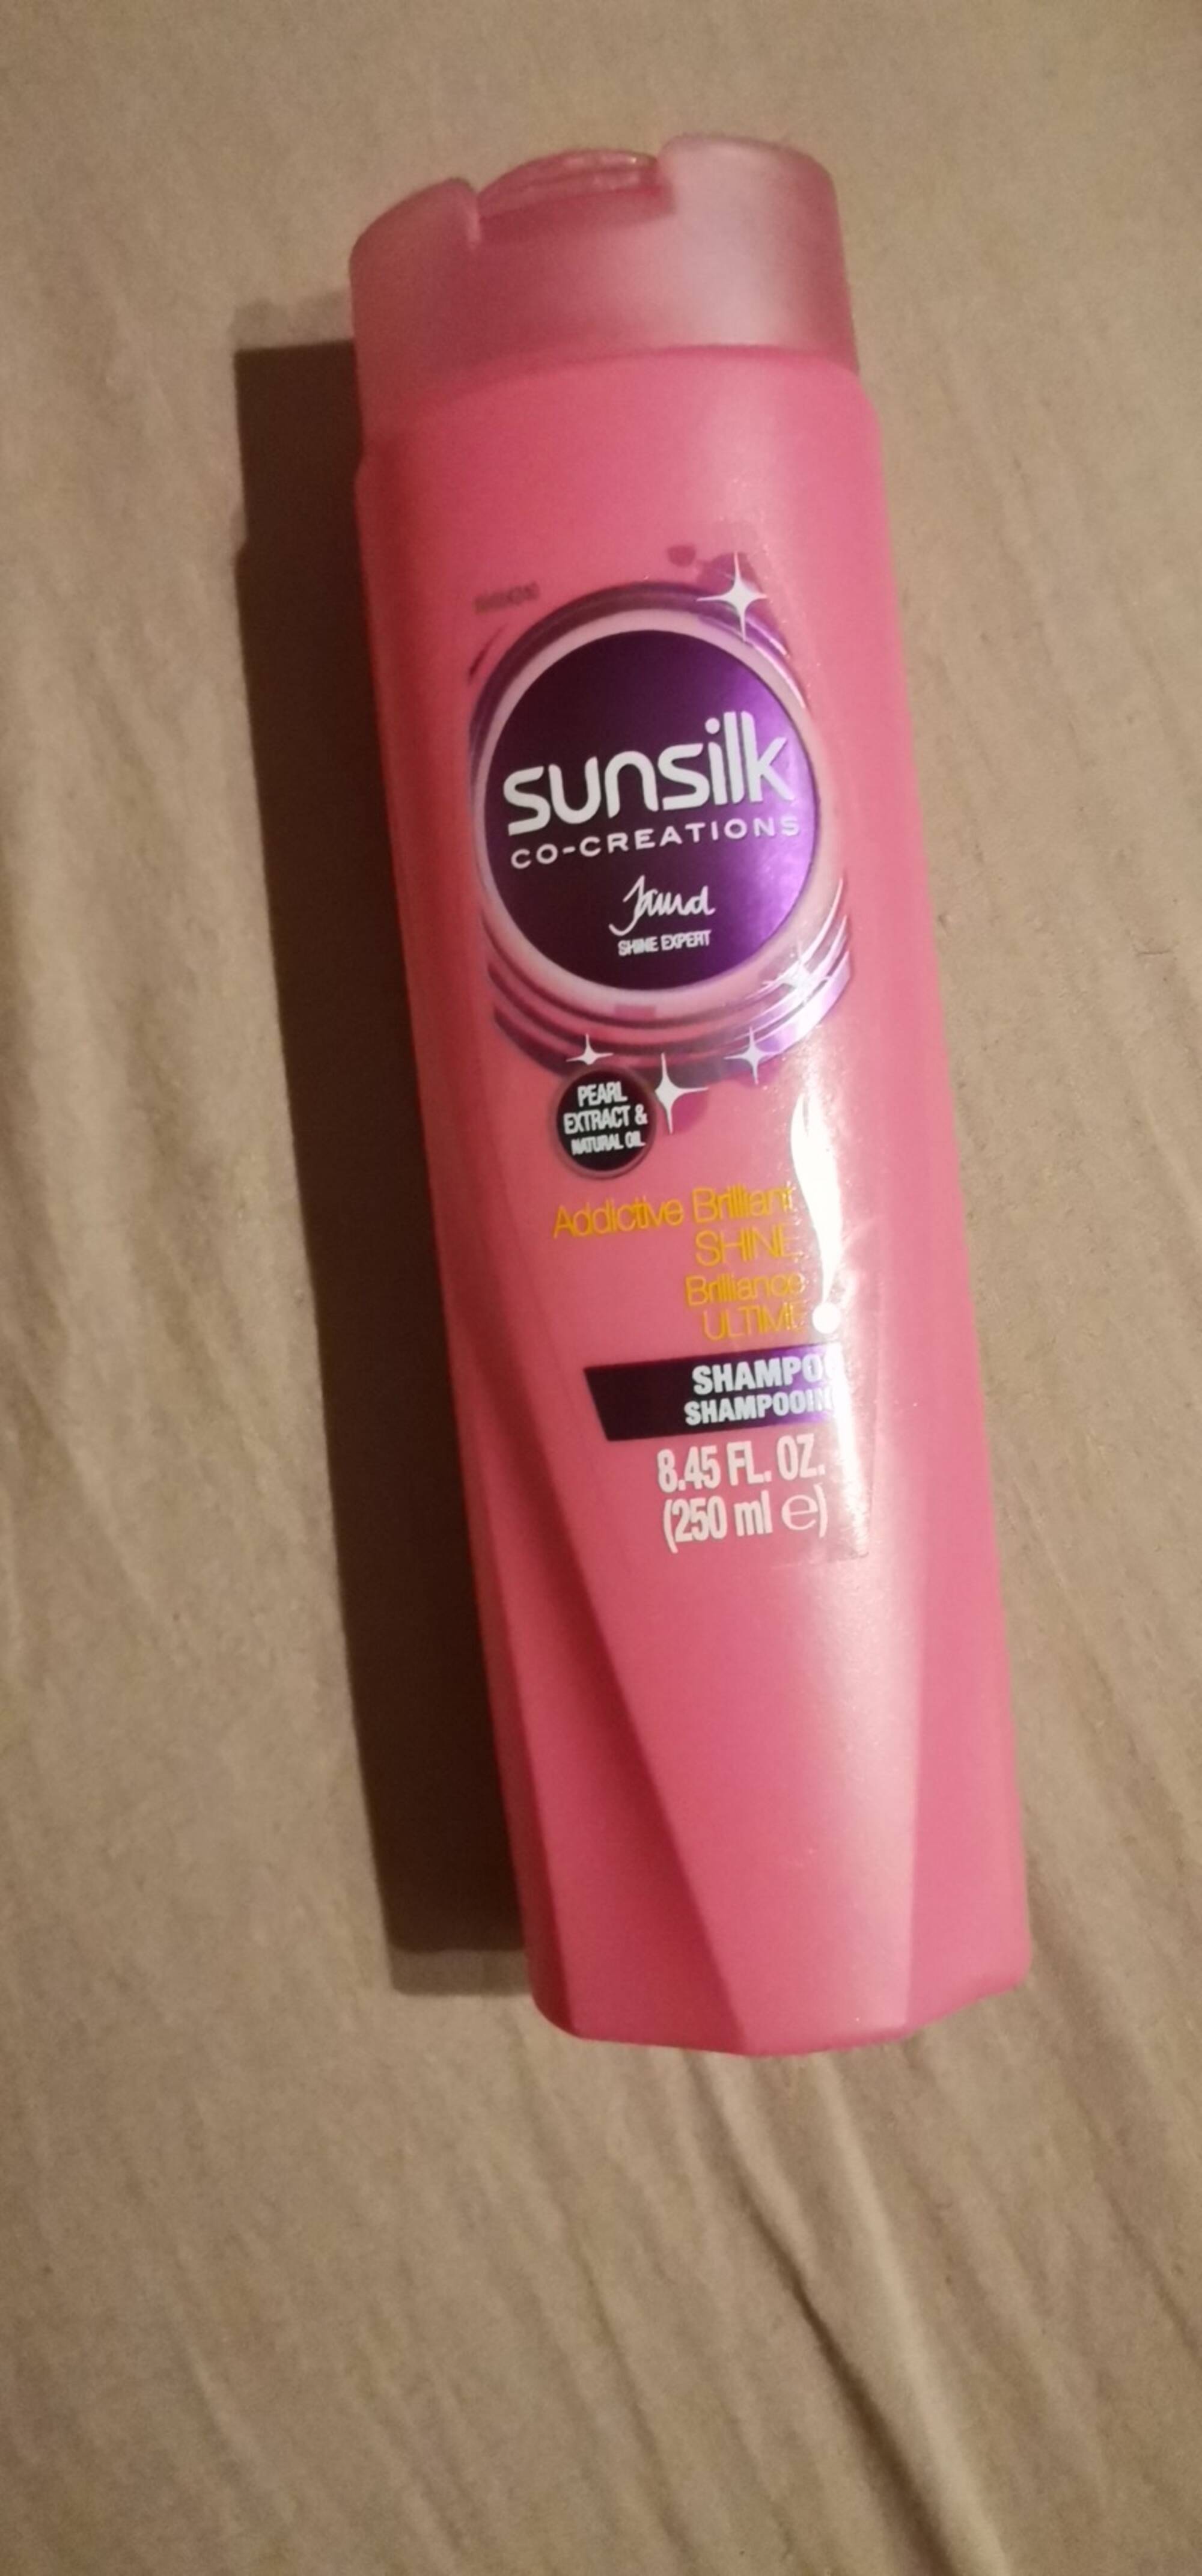 SUNSILK - Brillance ultime - Shampooing